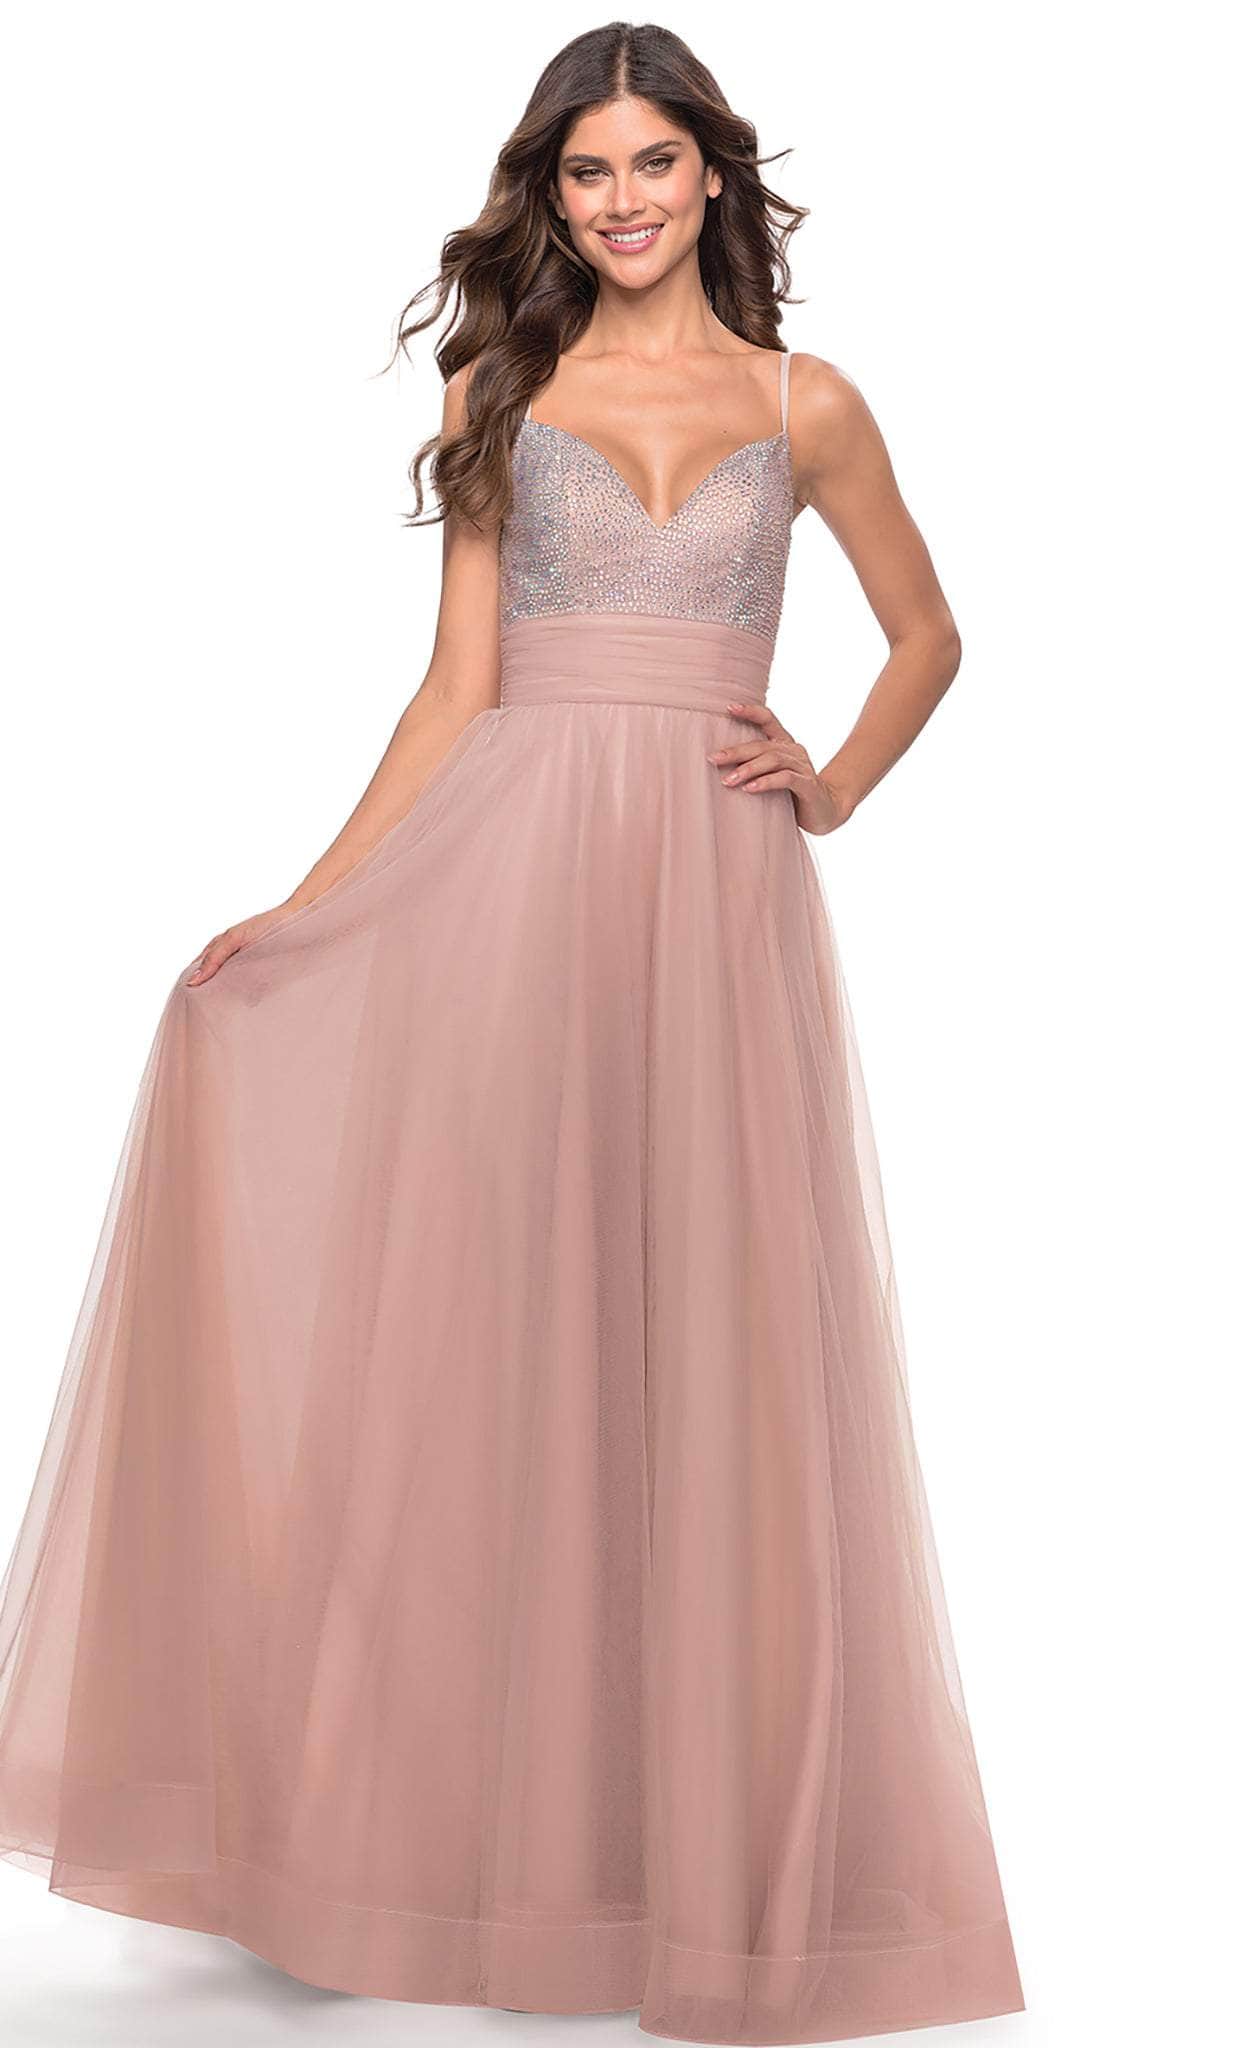 Image of La Femme 31238 - Beaded Tulle Prom Dress